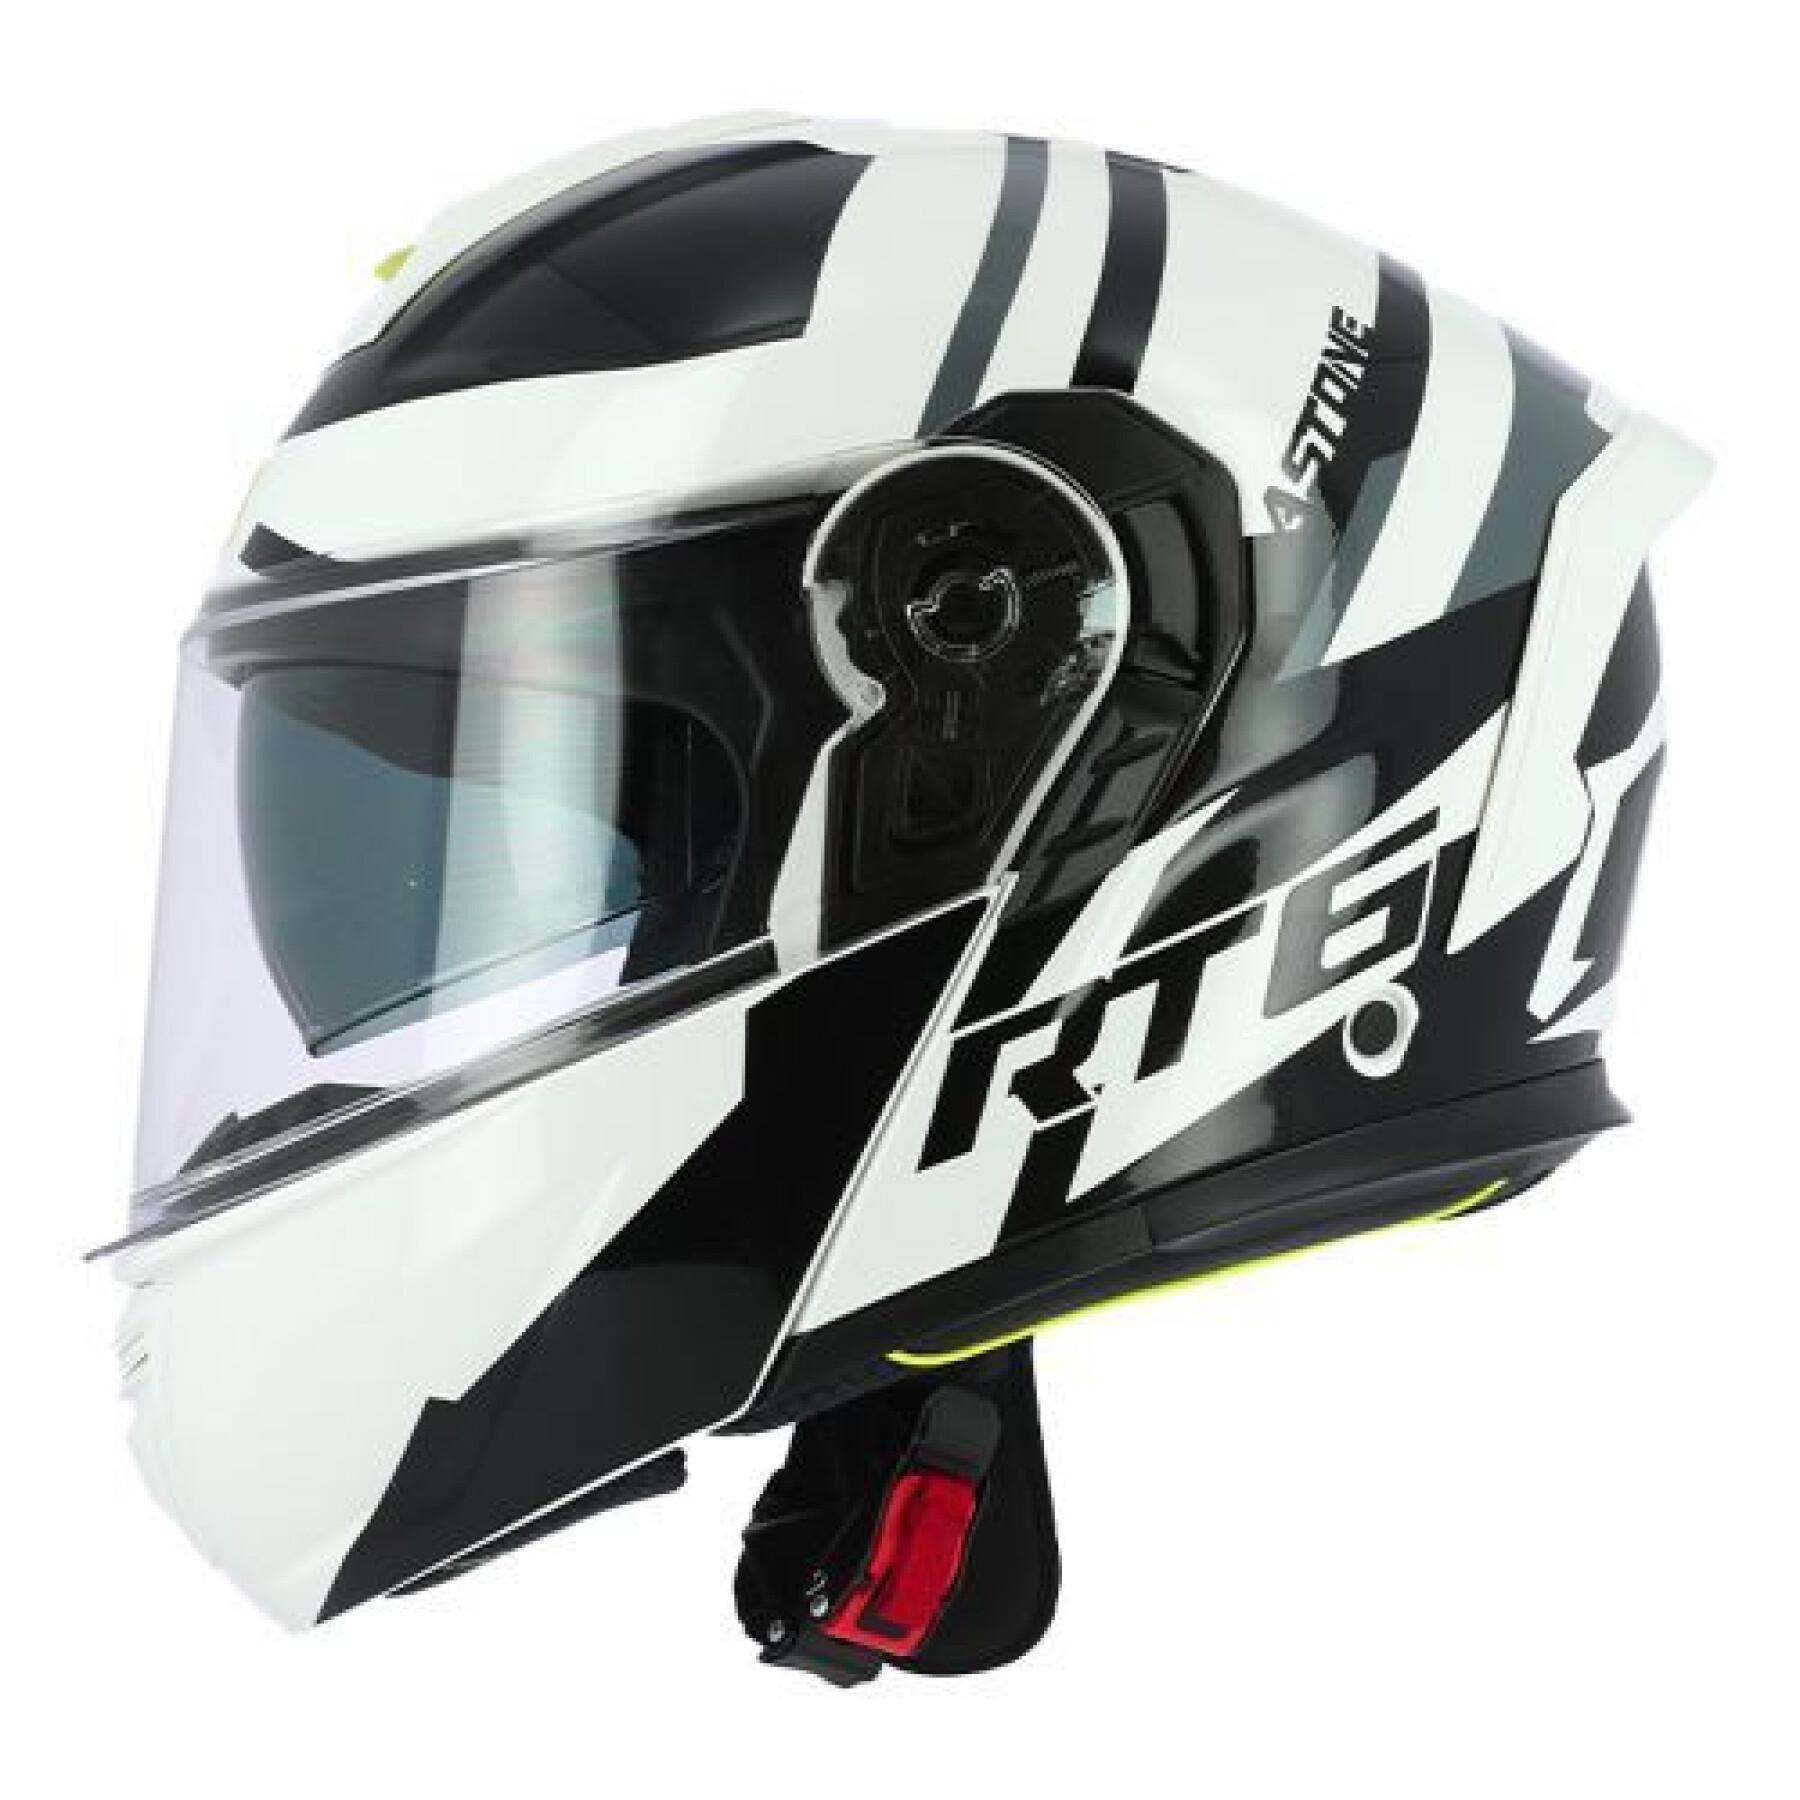 Modular motorcycle helmet Astone RT6 Graphic Desmo